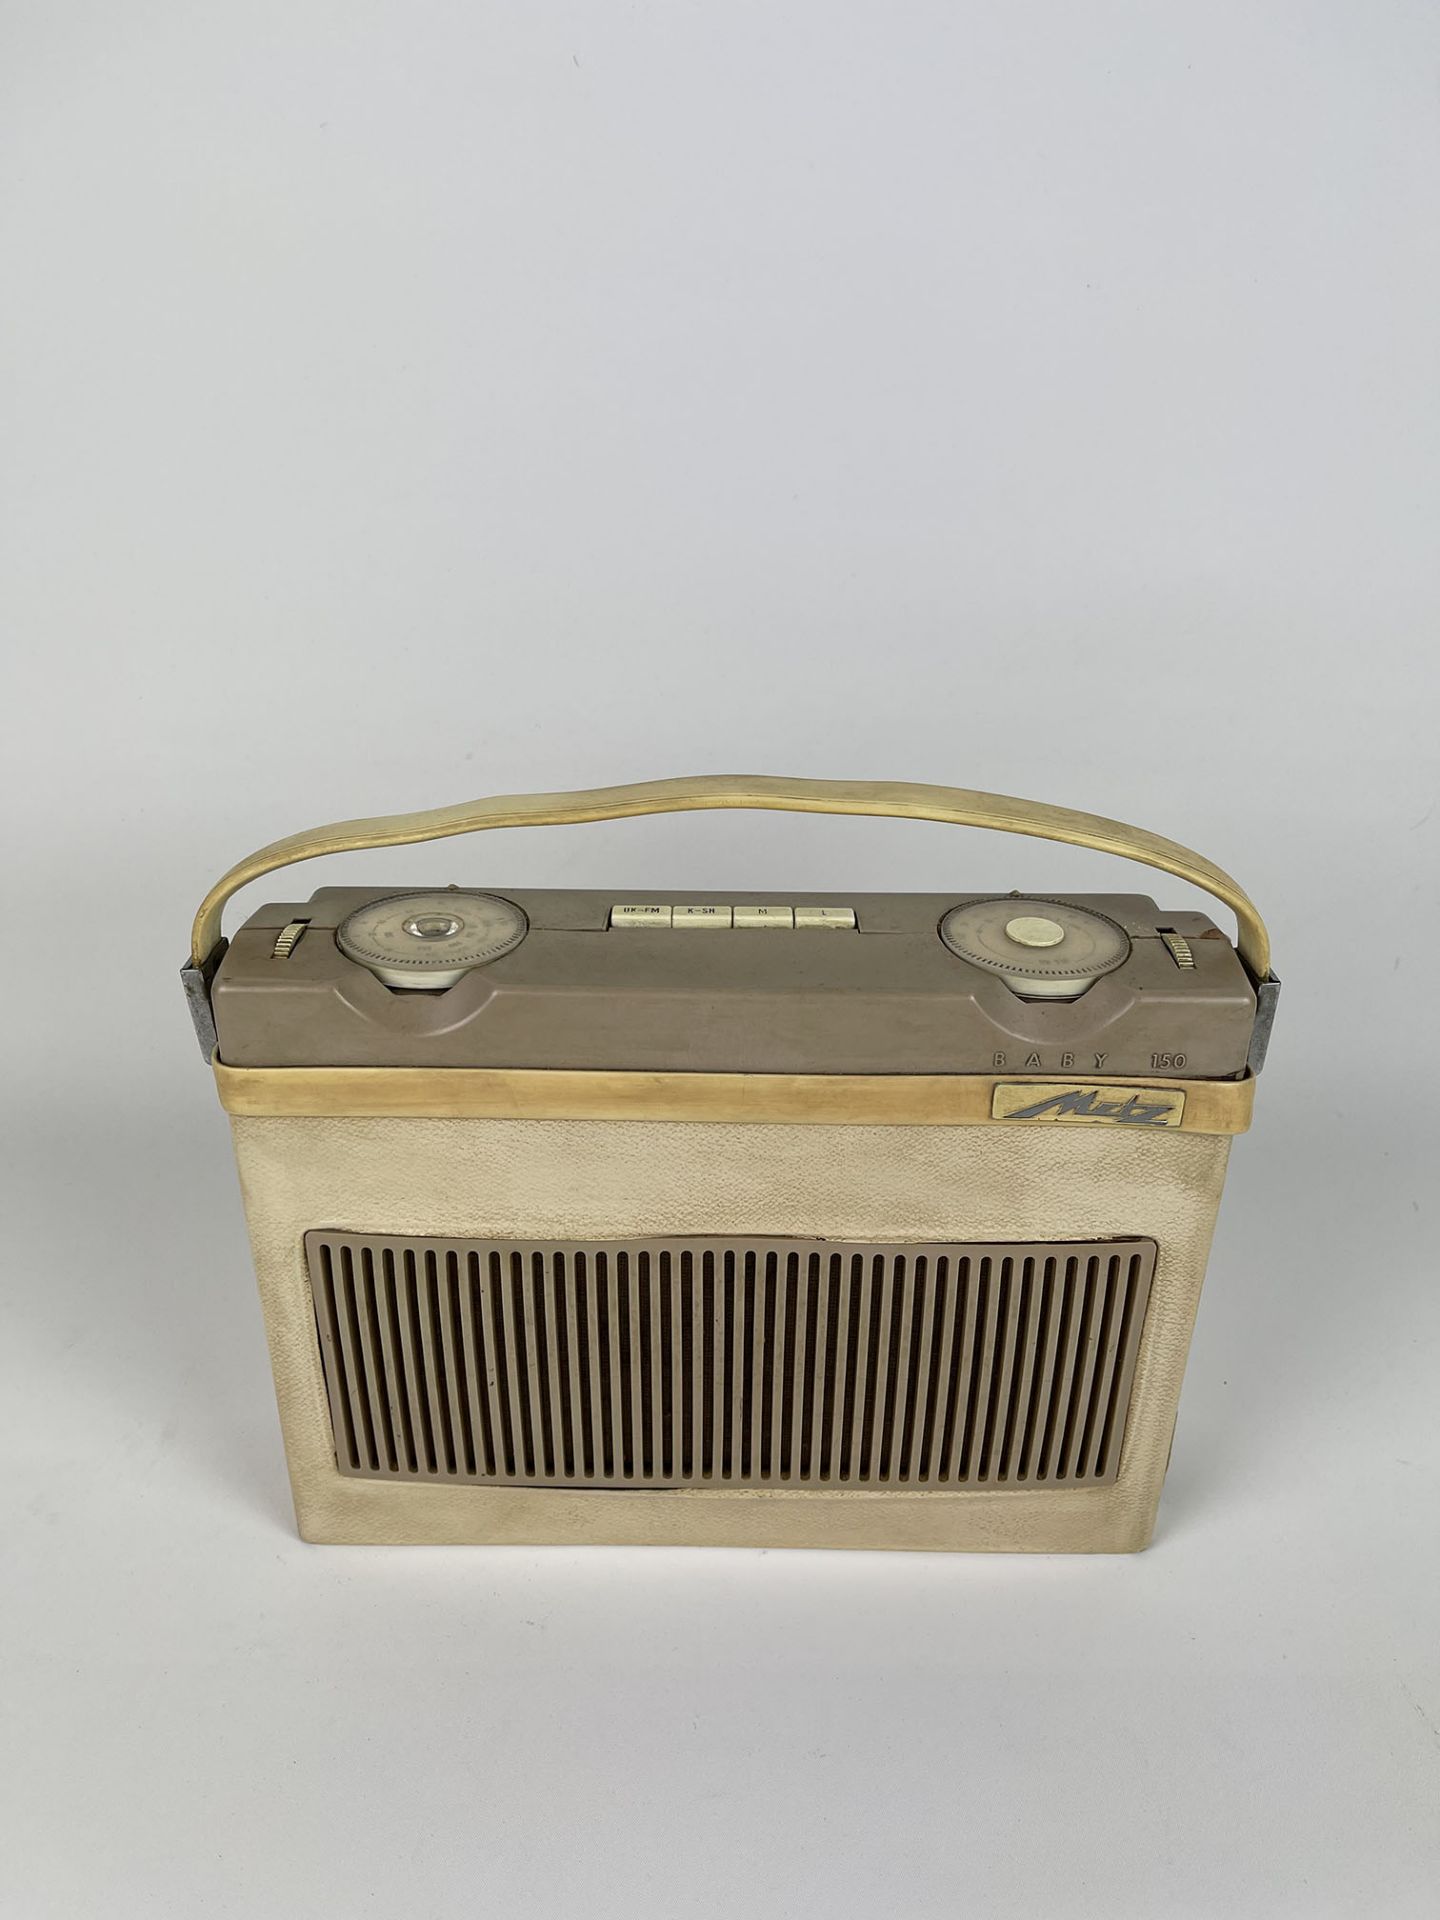 Lot of 4 Vintage Transistor Radios, 1950-1962 - Image 5 of 7